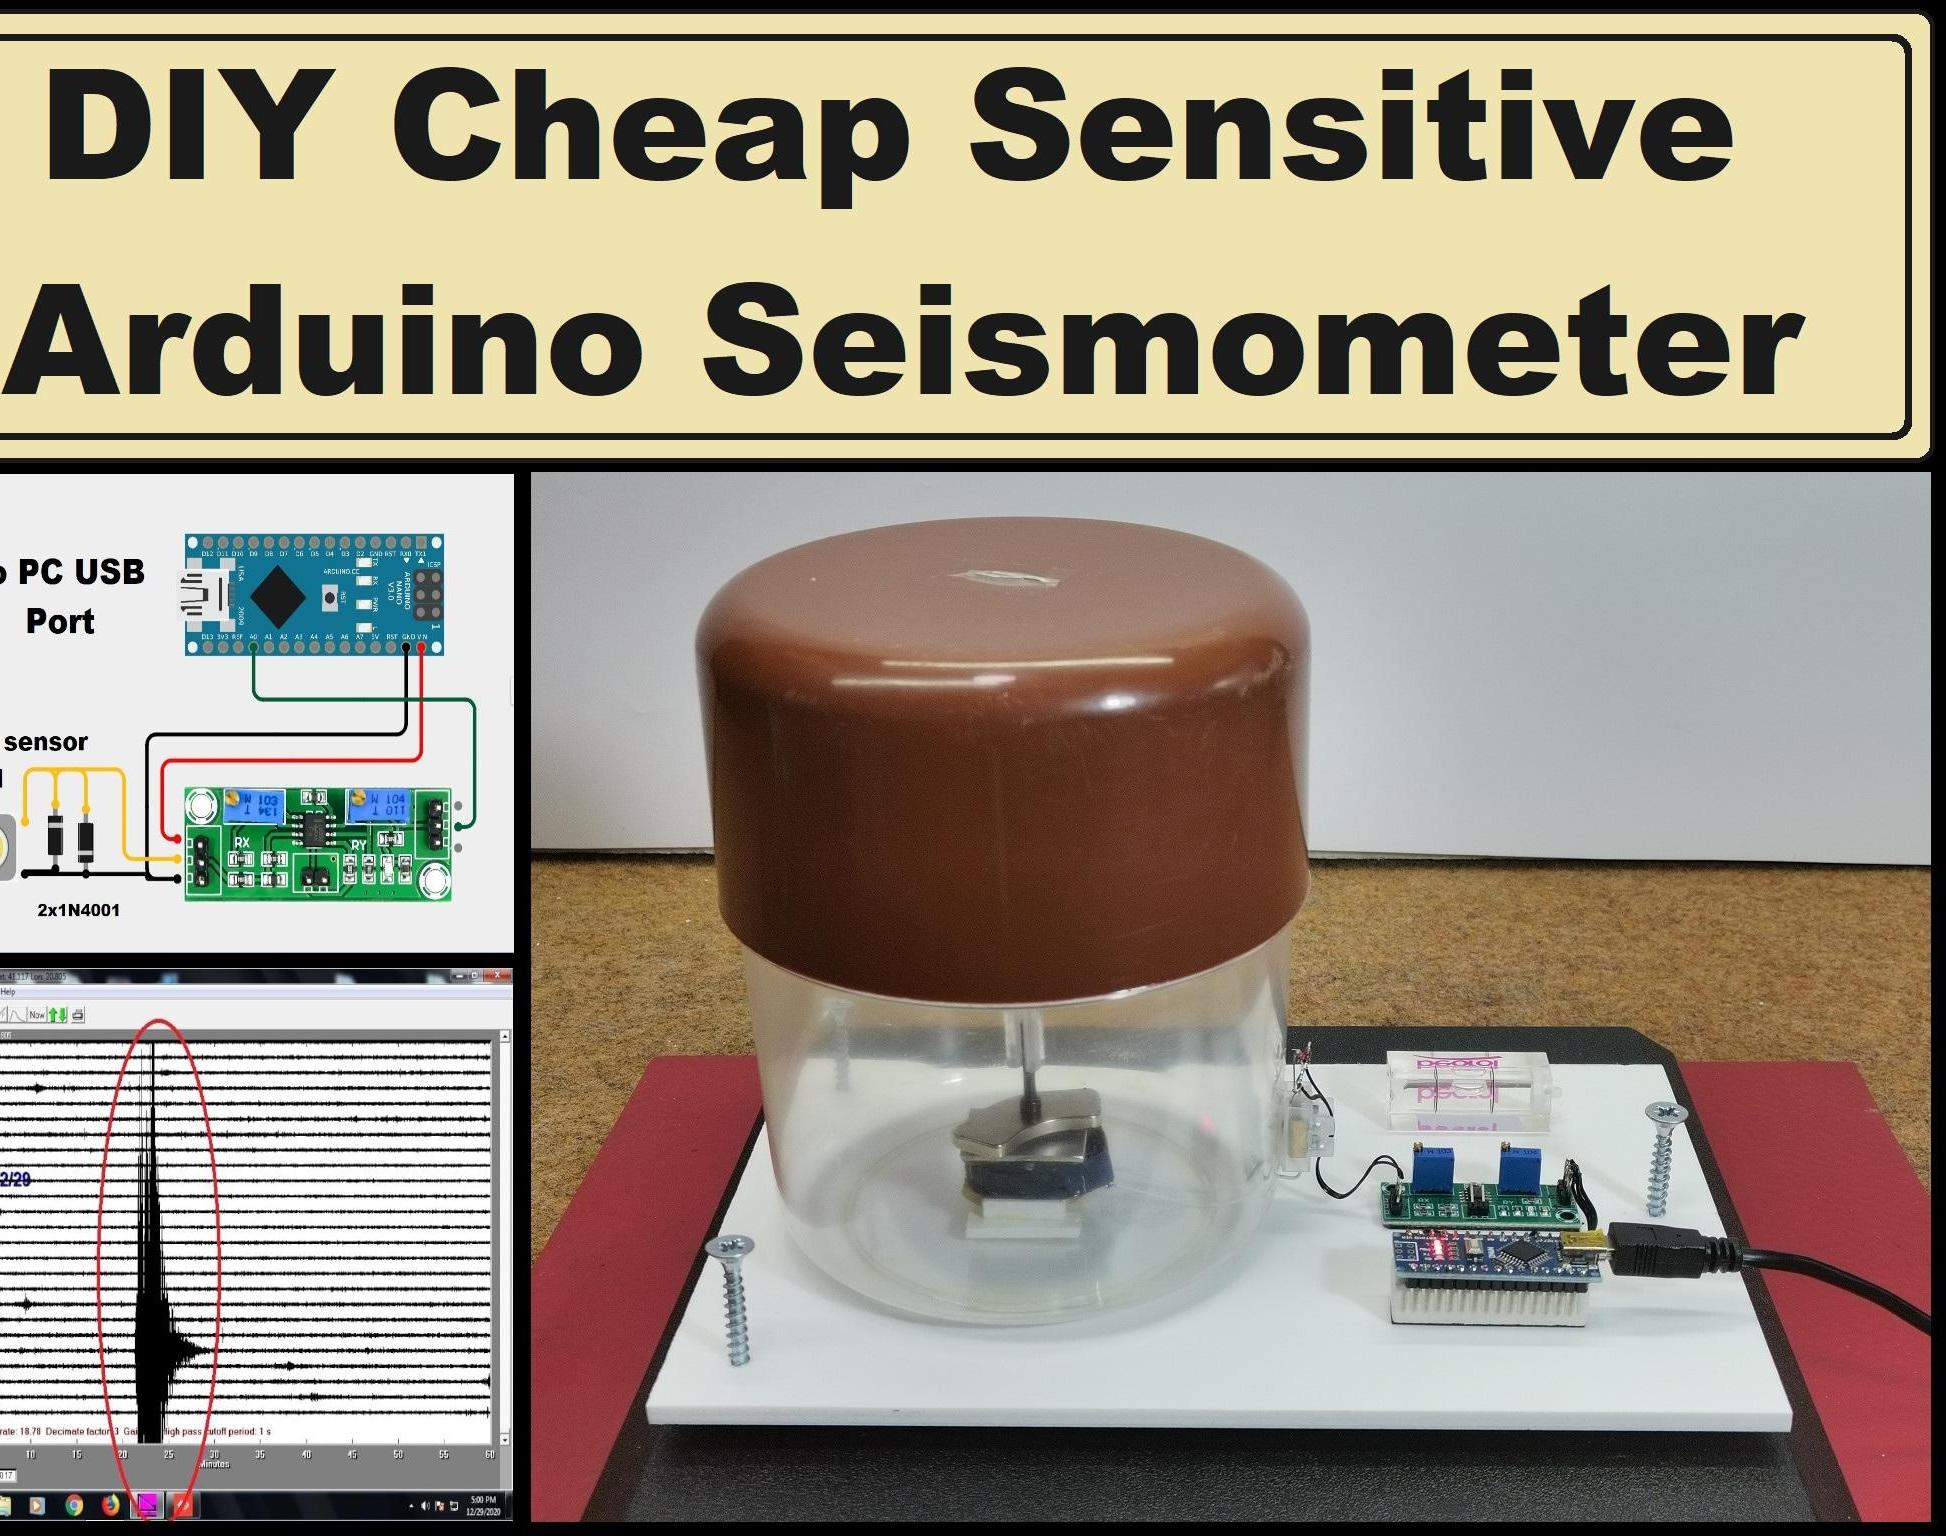 DIY Extremly Sensitive and Cheap Arduino Seismometer